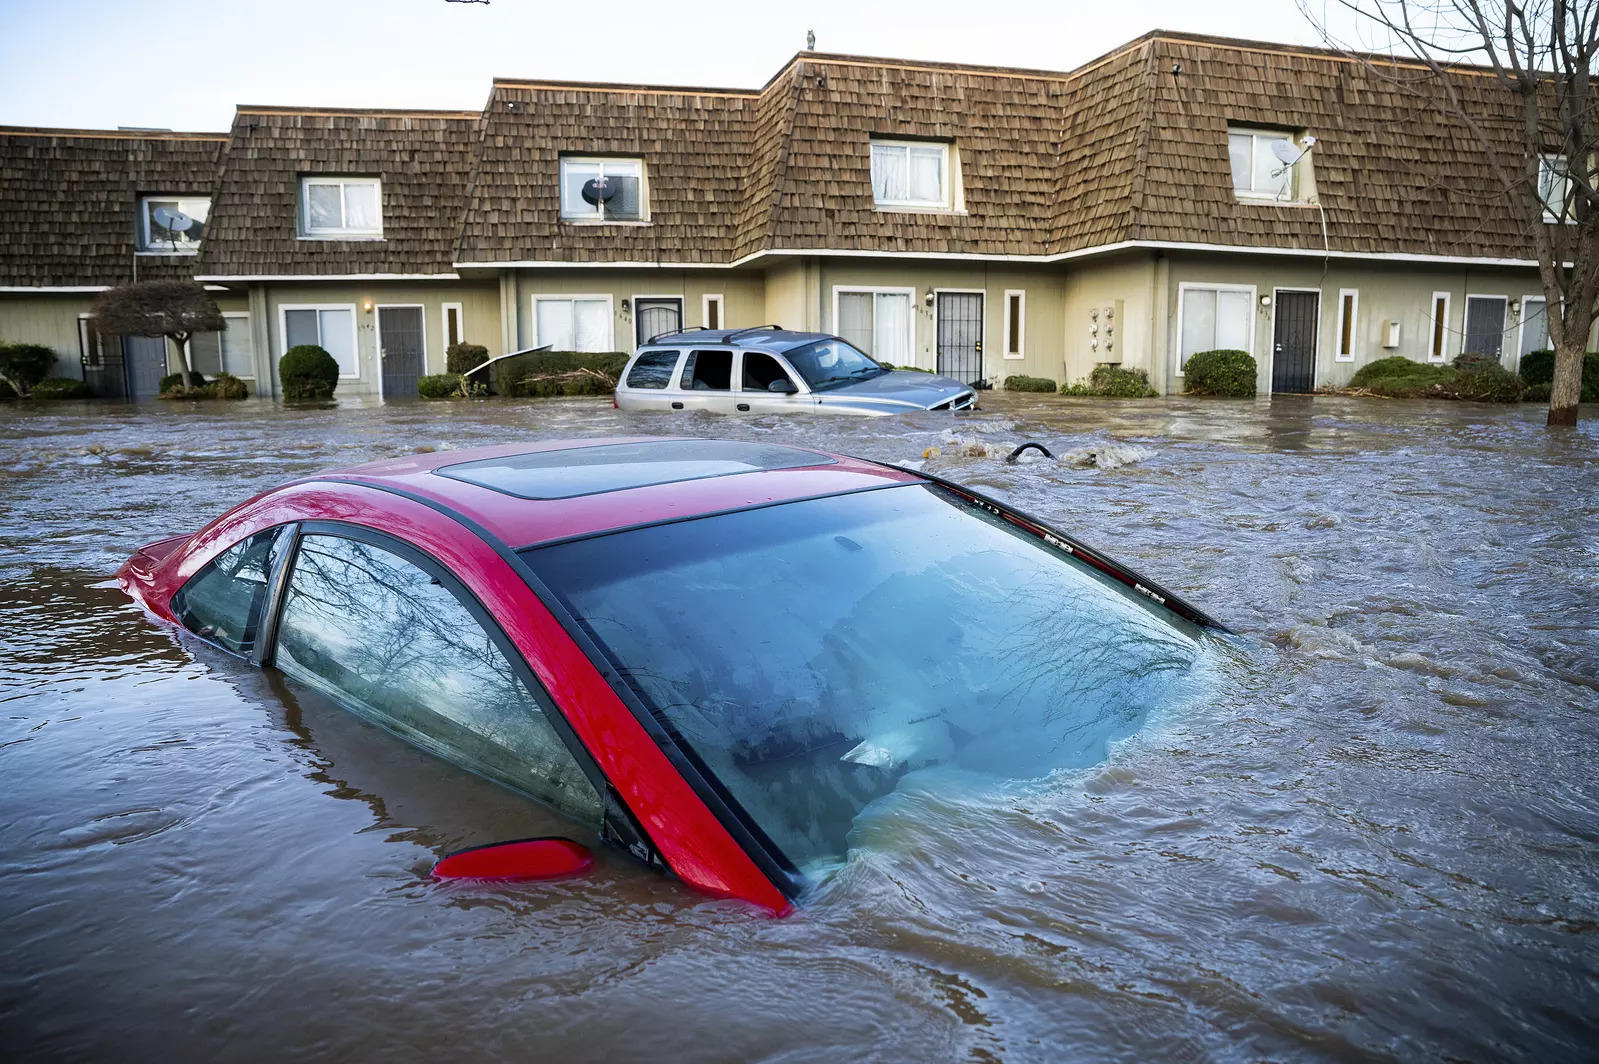 40 images of California’s floods and landslides